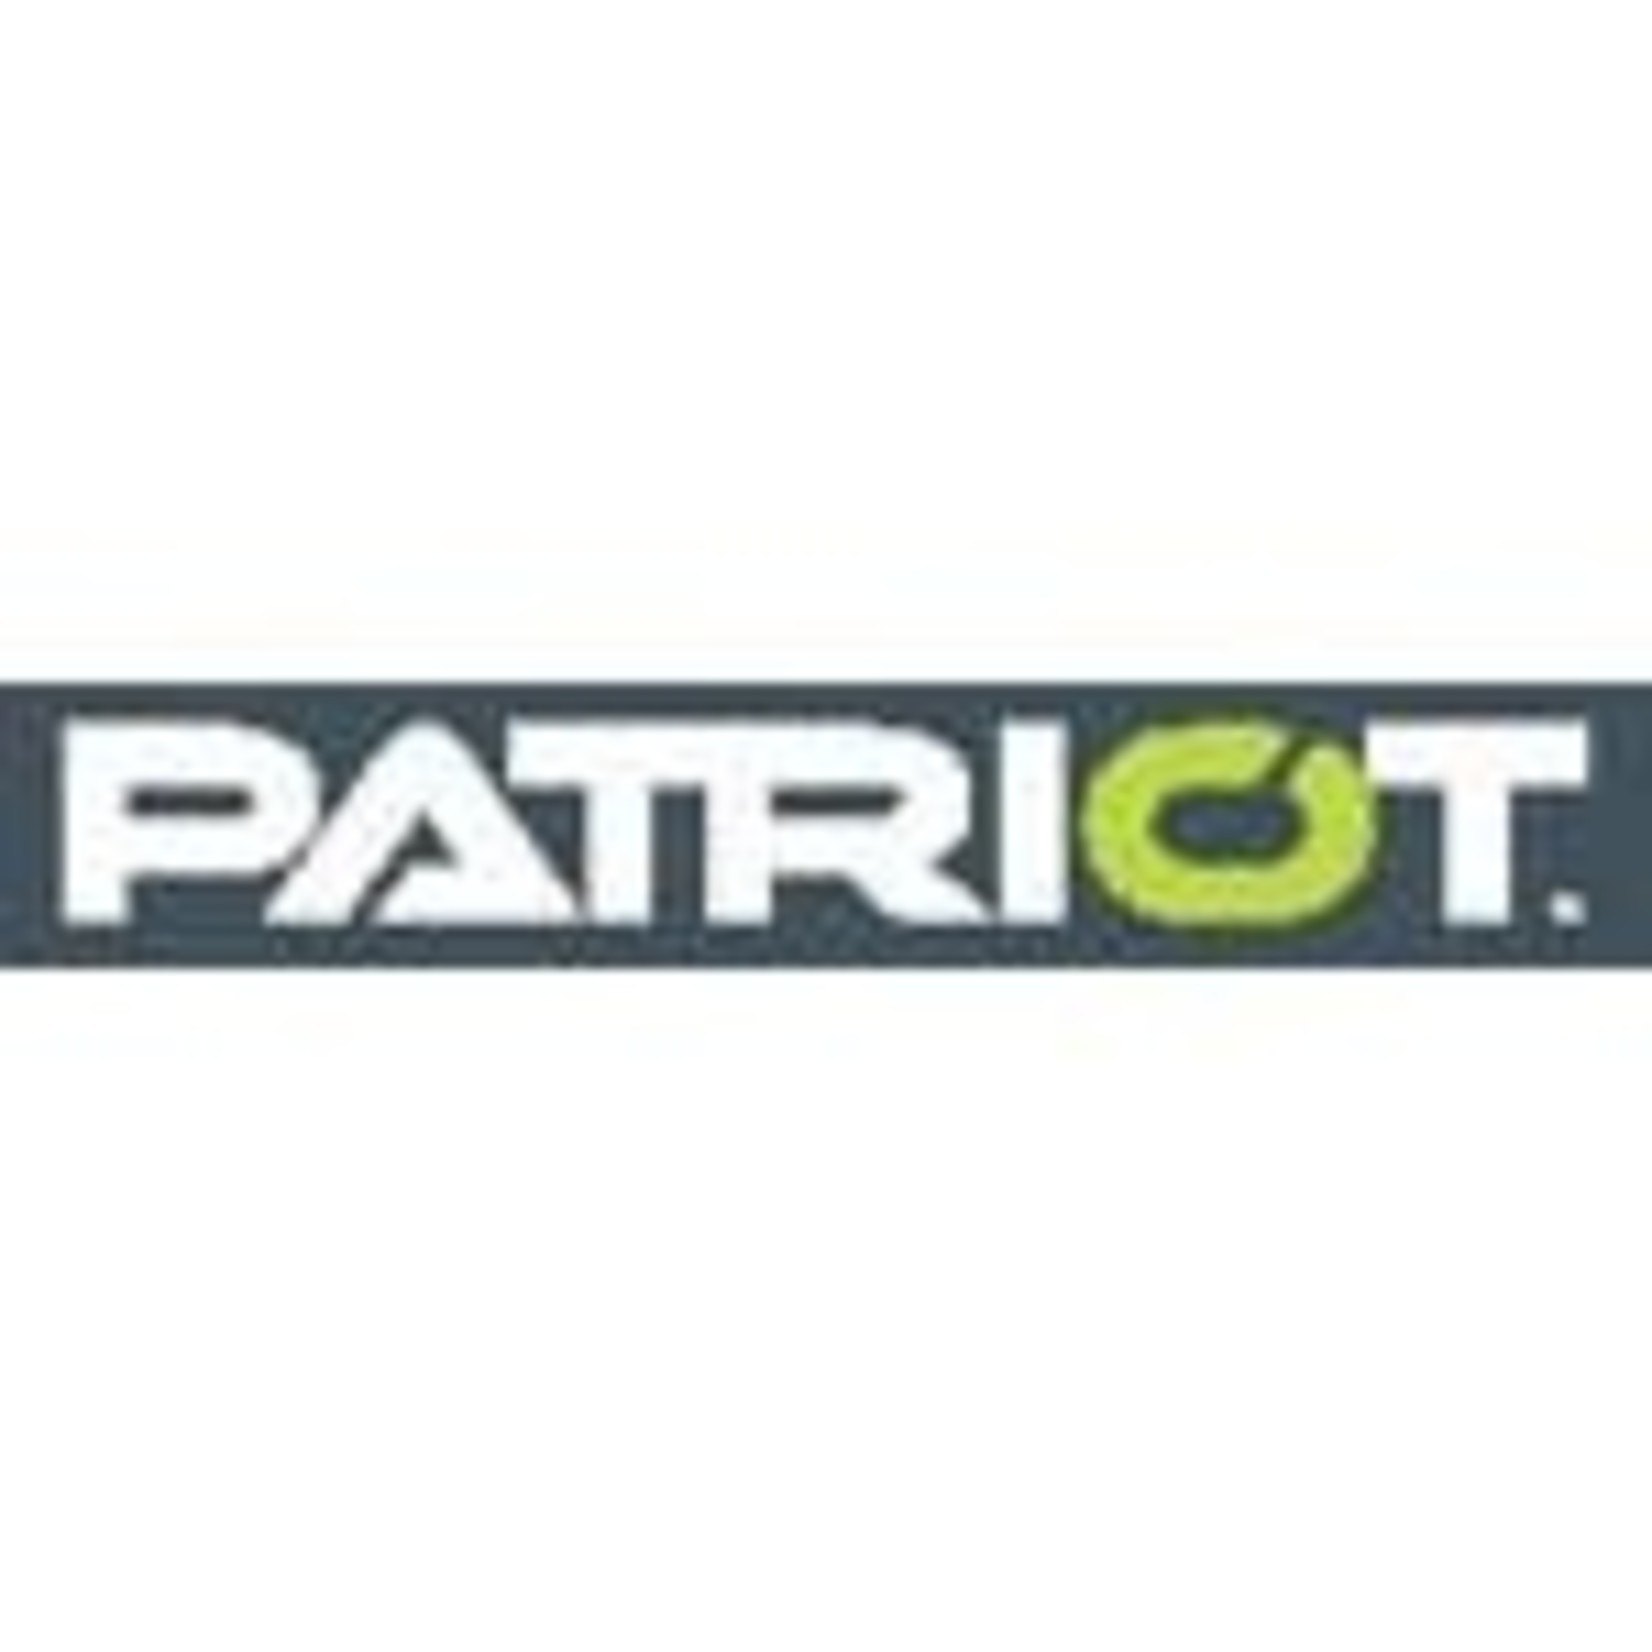 Patriot Patriot T-Post Topper Insulator